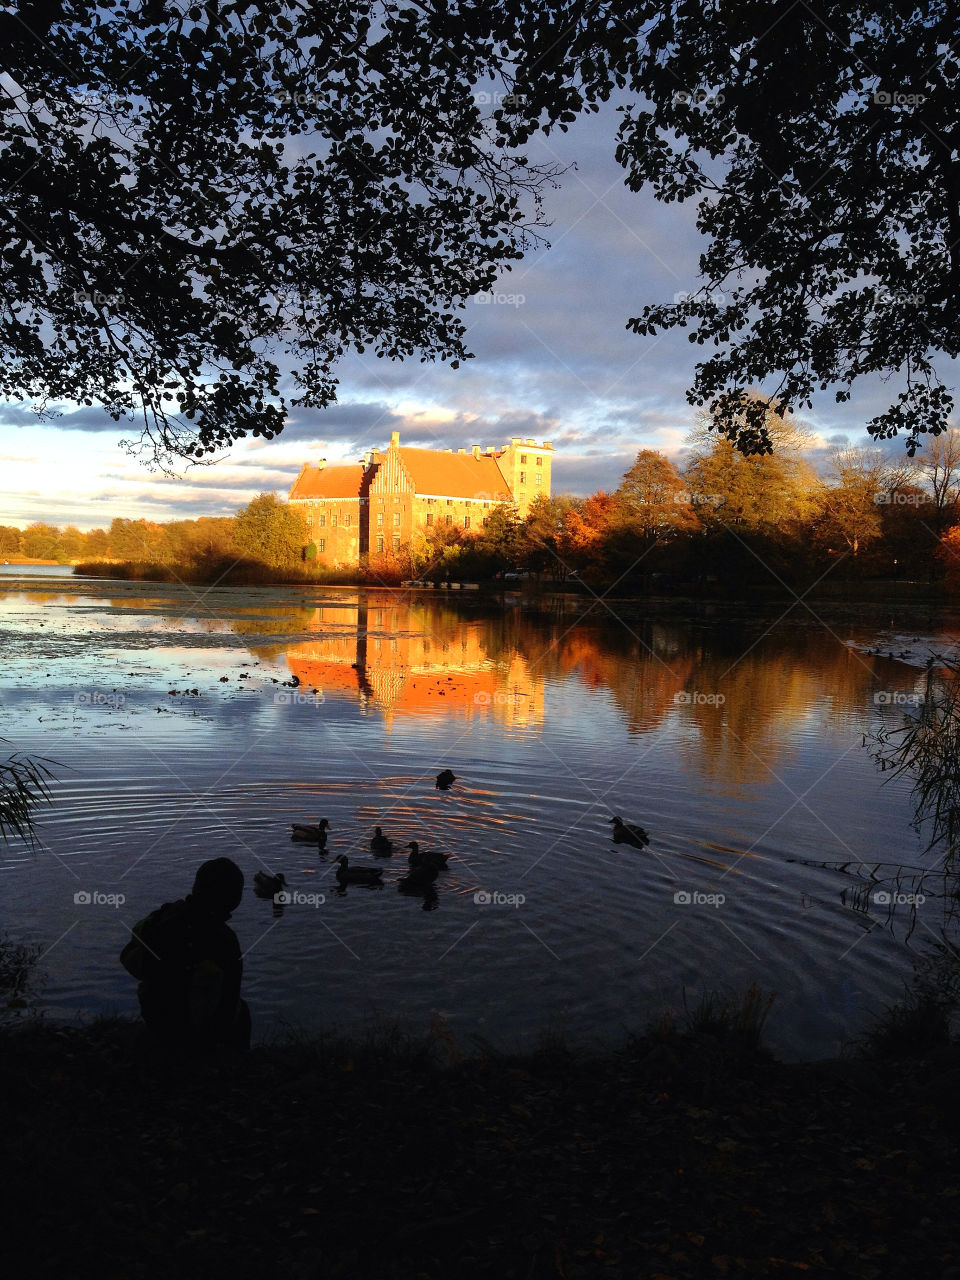 sweden pond ducks castle by elluca